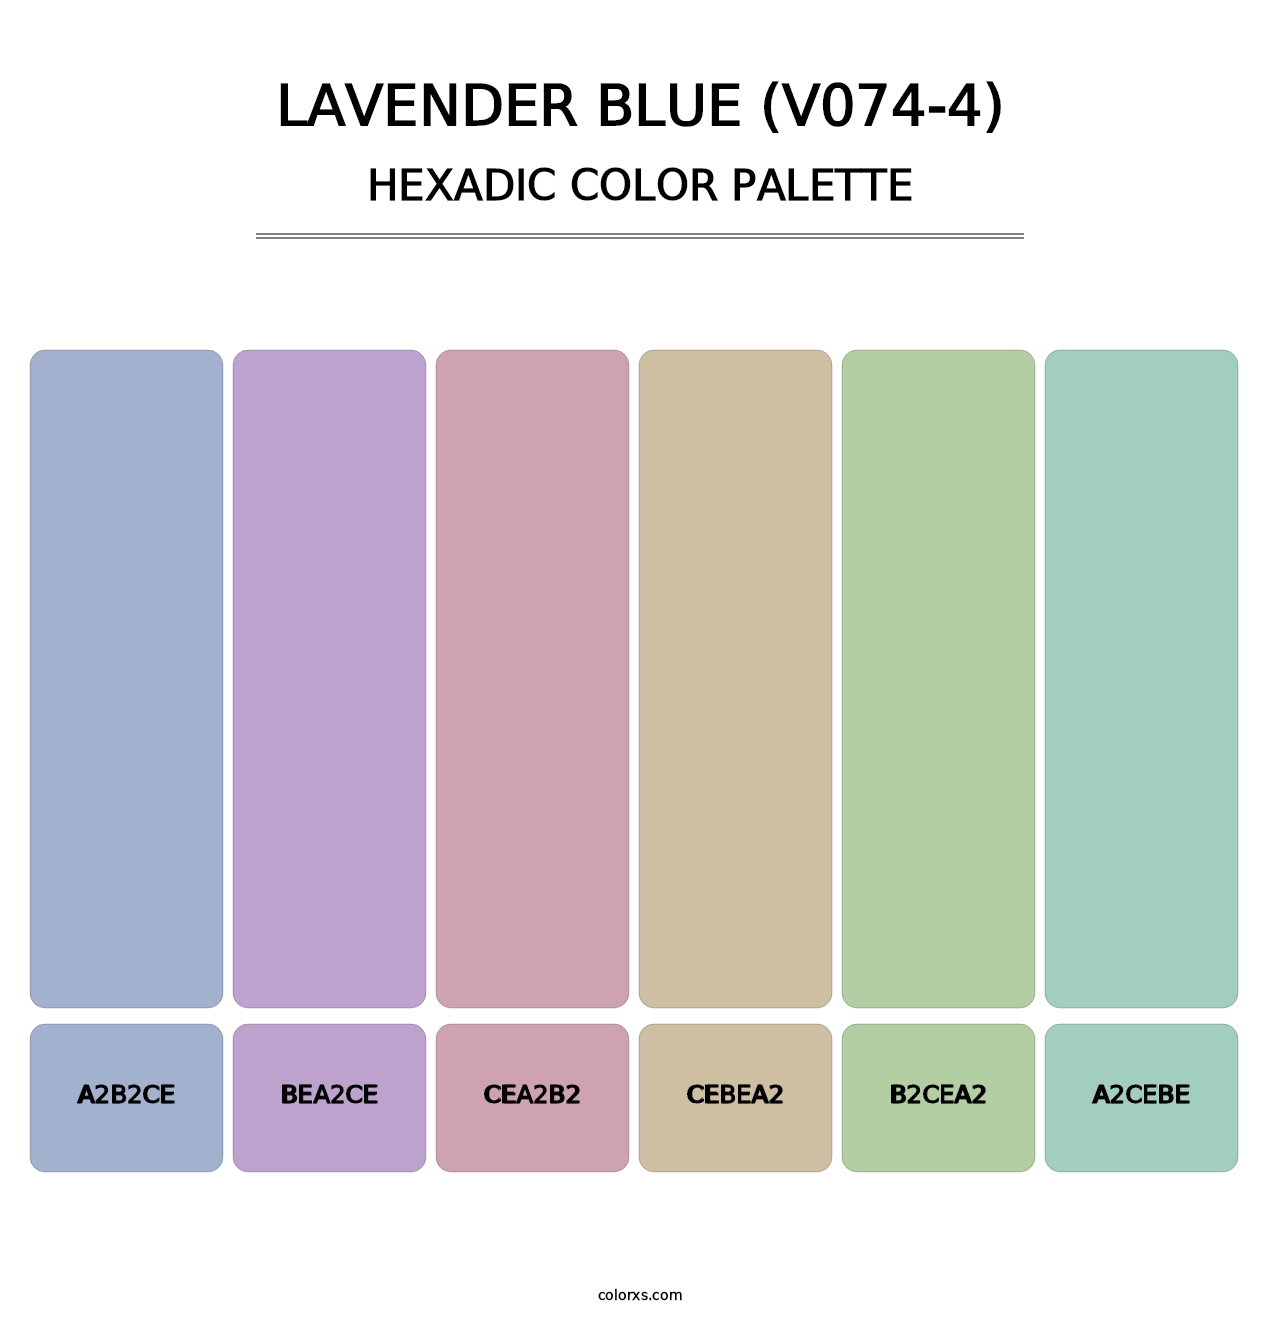 Lavender Blue (V074-4) - Hexadic Color Palette